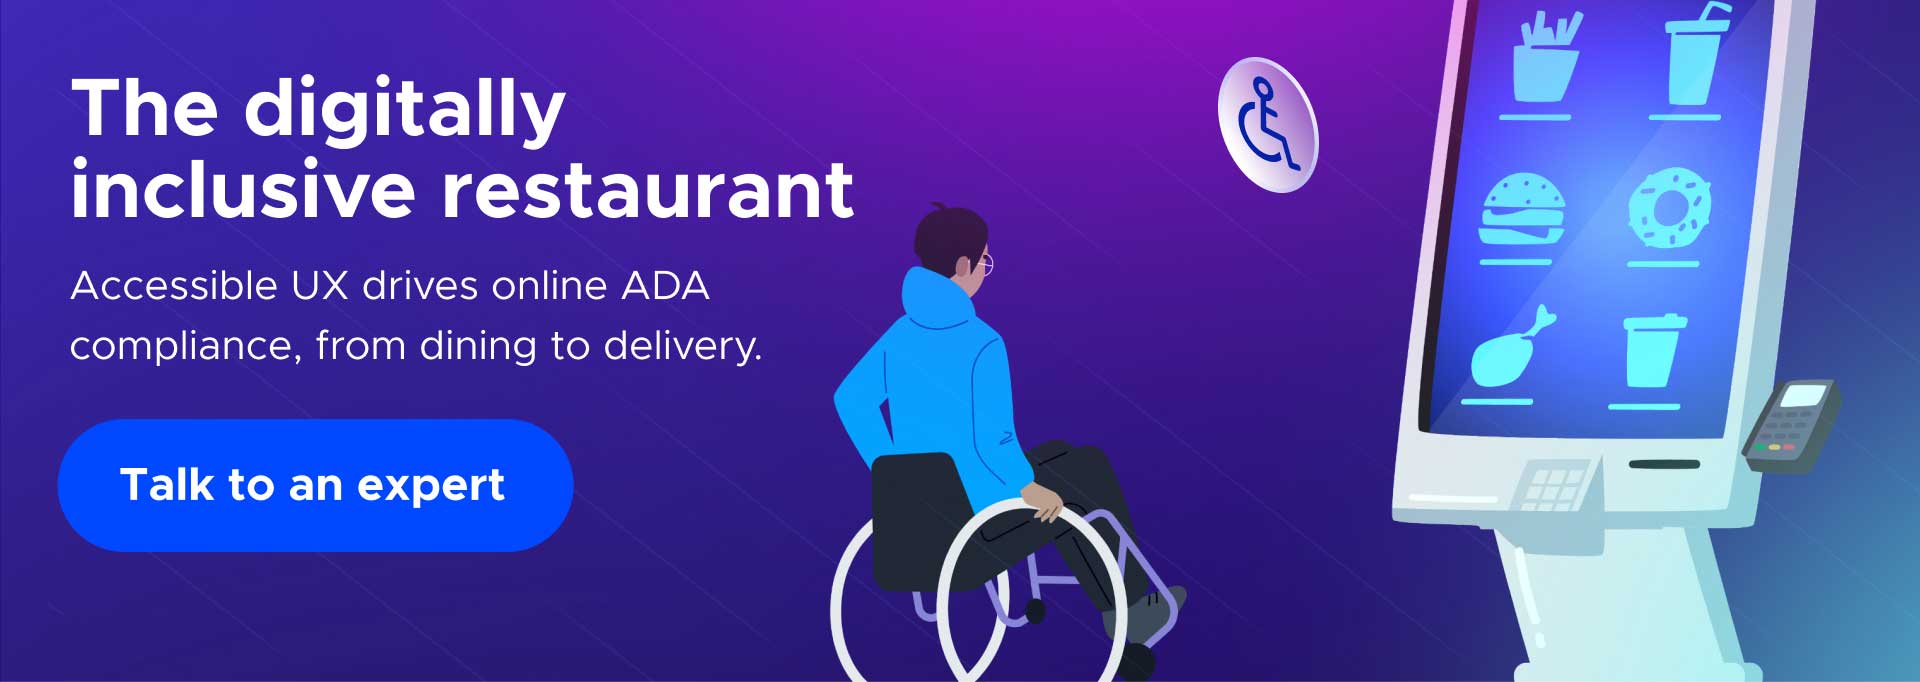 The digitally inclusive restaurant - banner